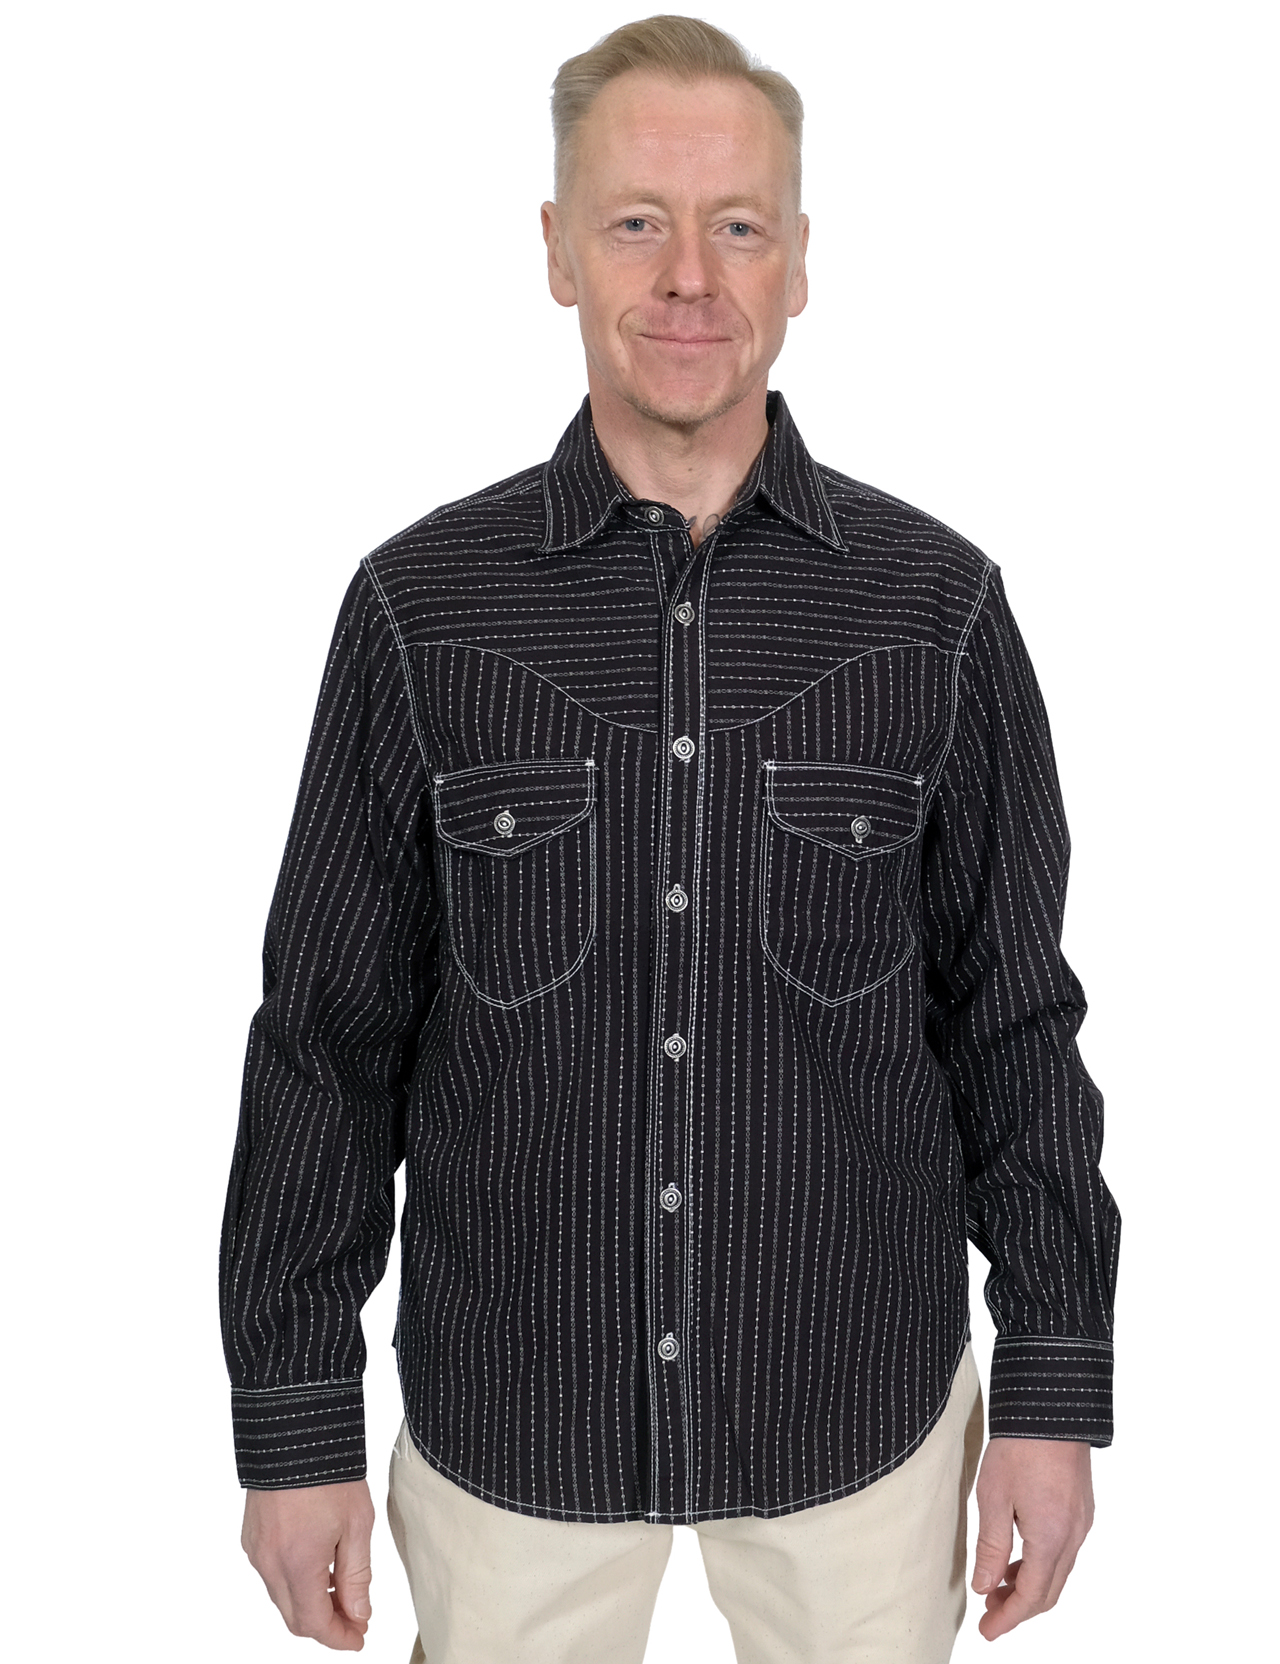 Freenote Cloth - Packard Shirt - Black Stripe